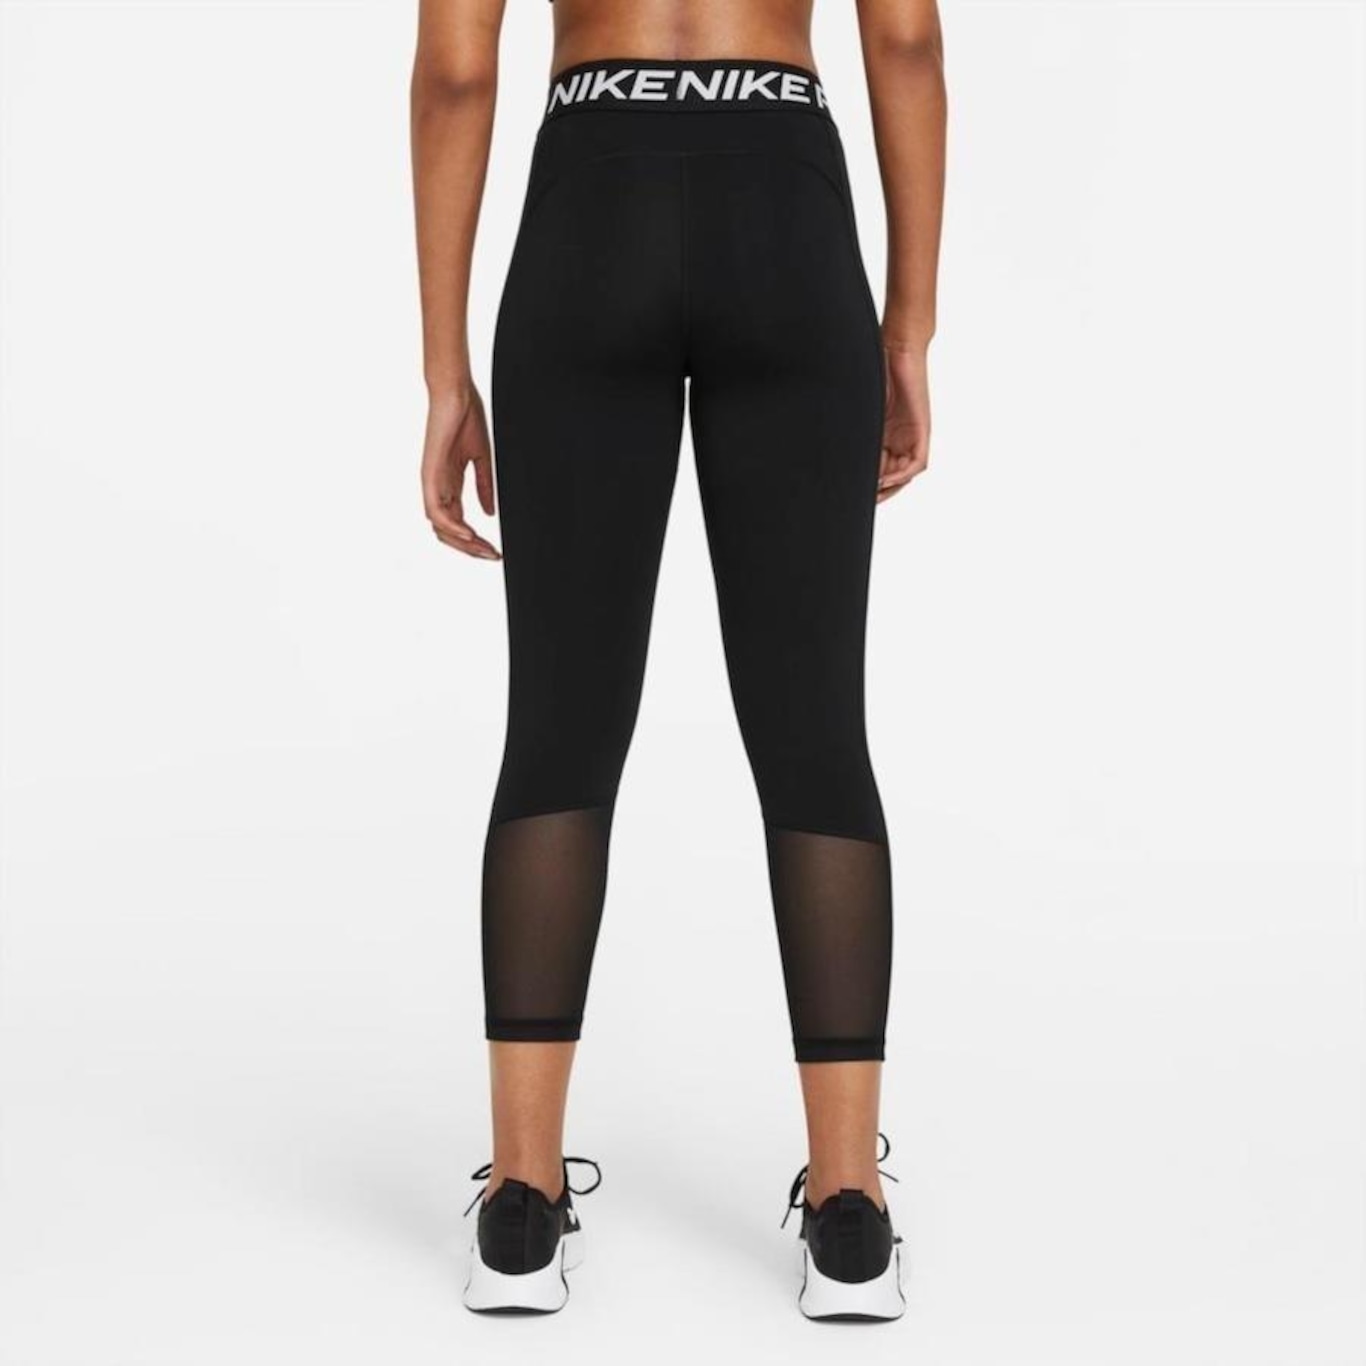 Calça Legging Nike Pro 365 - Feminina